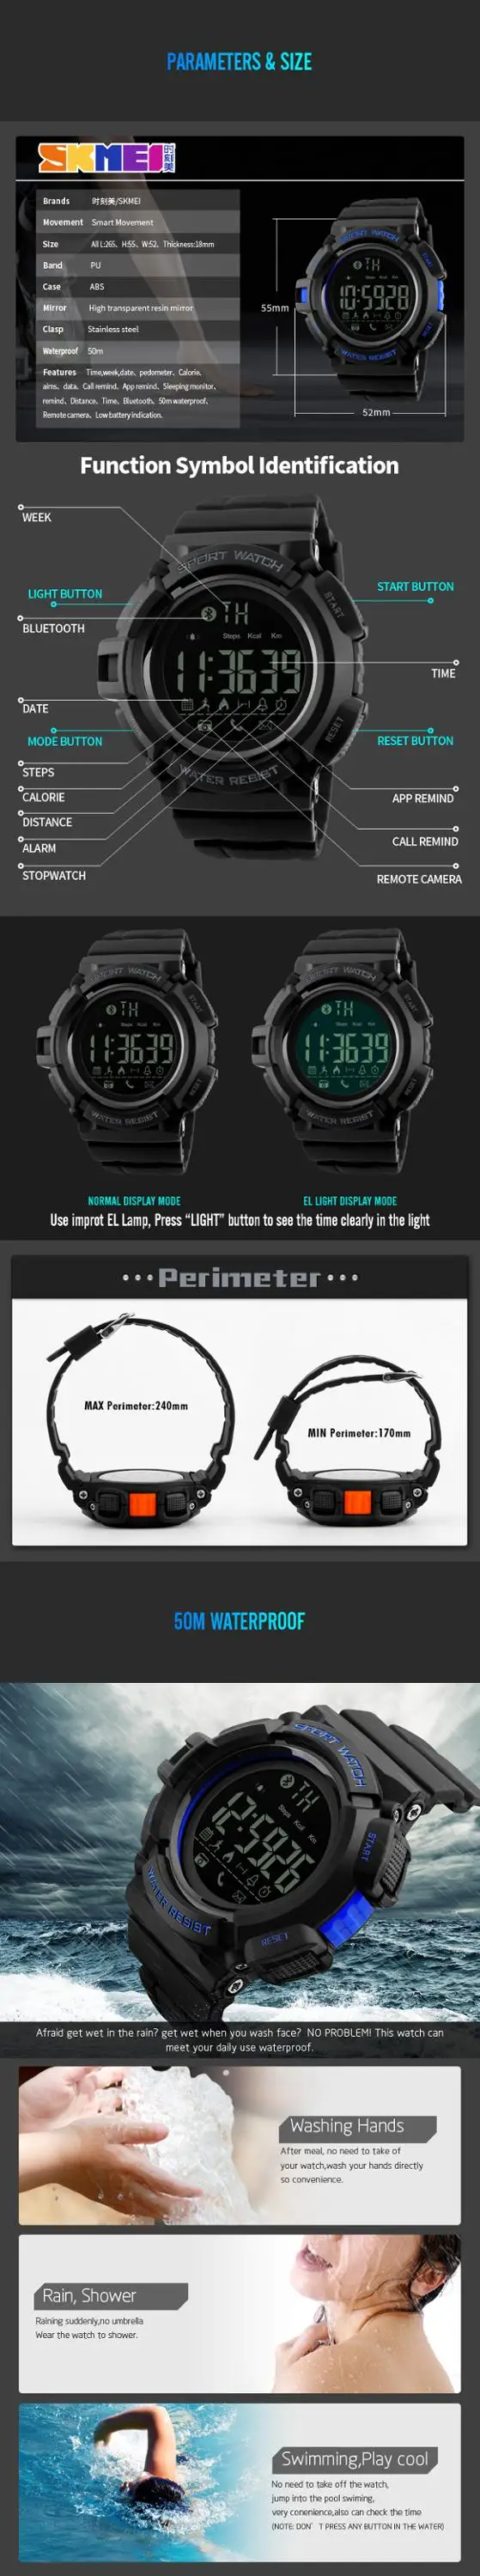 Skmei 1245 digital mens watches 5 ATM waterproof wristwatches smart watch